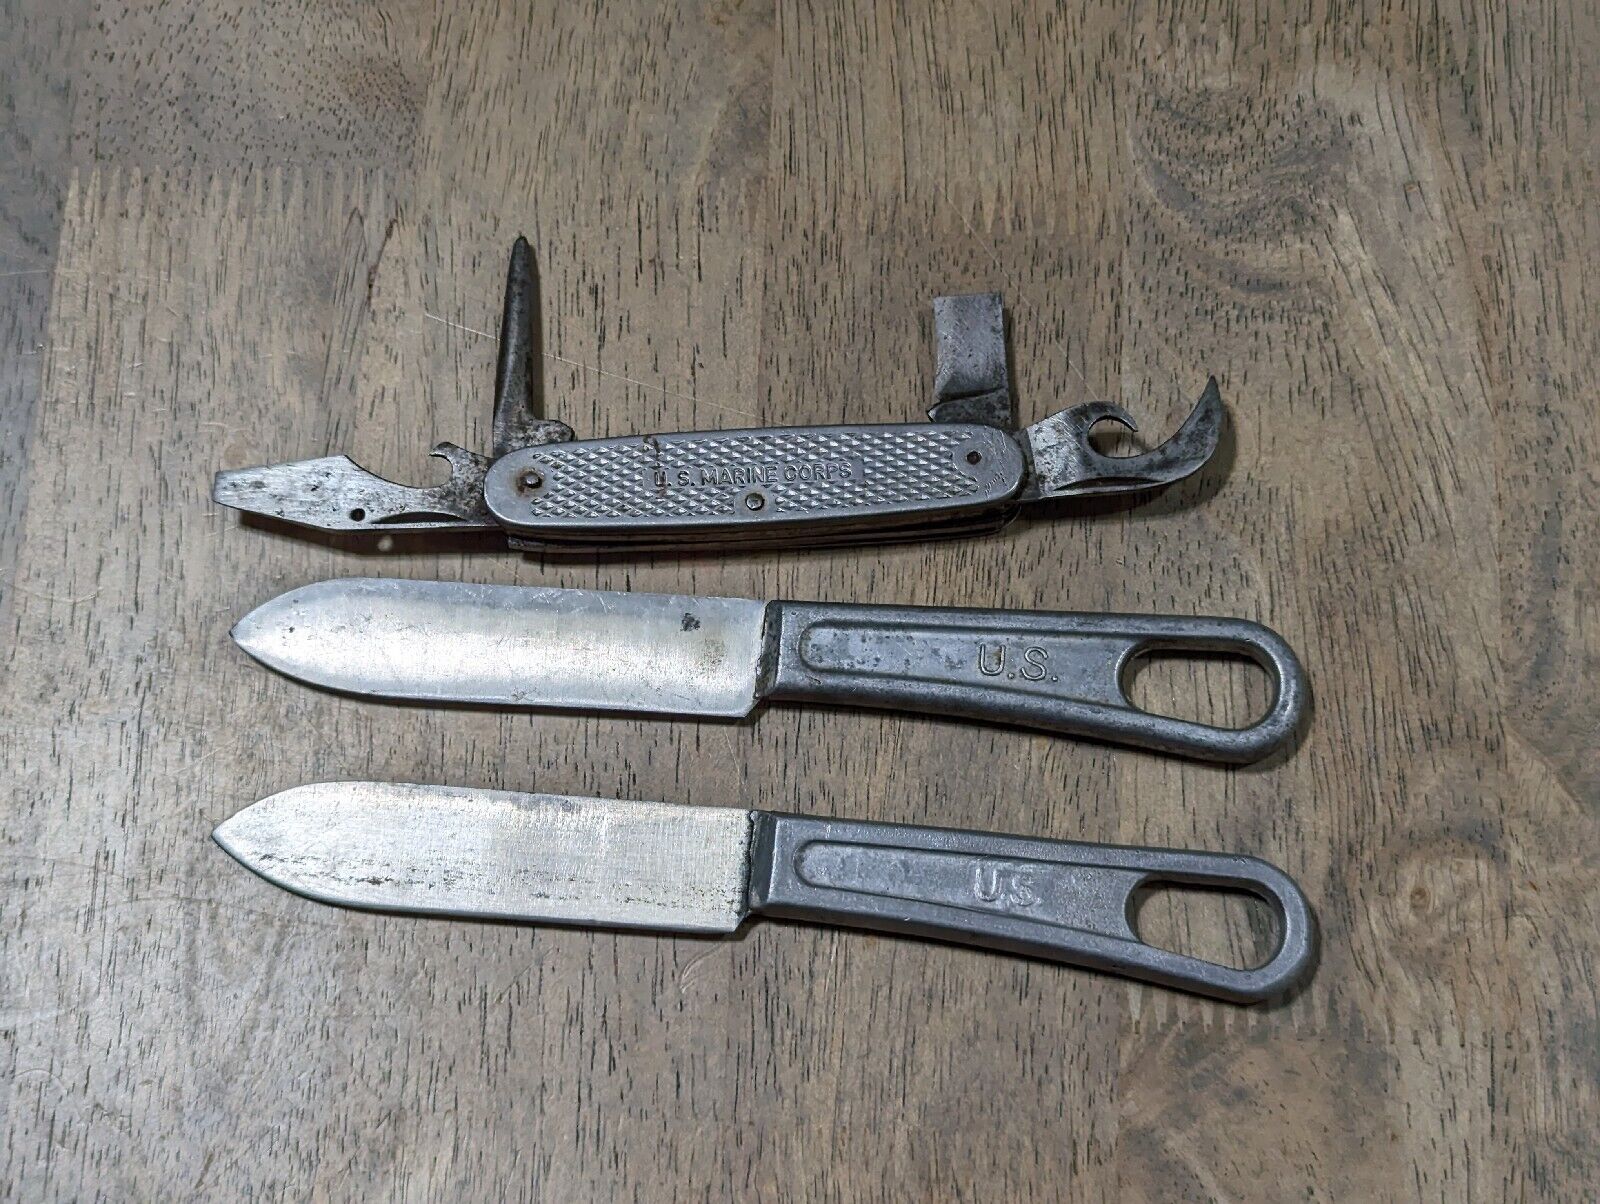 U.S. Mess Kit - 1944 Knife lot of 3 , one broken blade